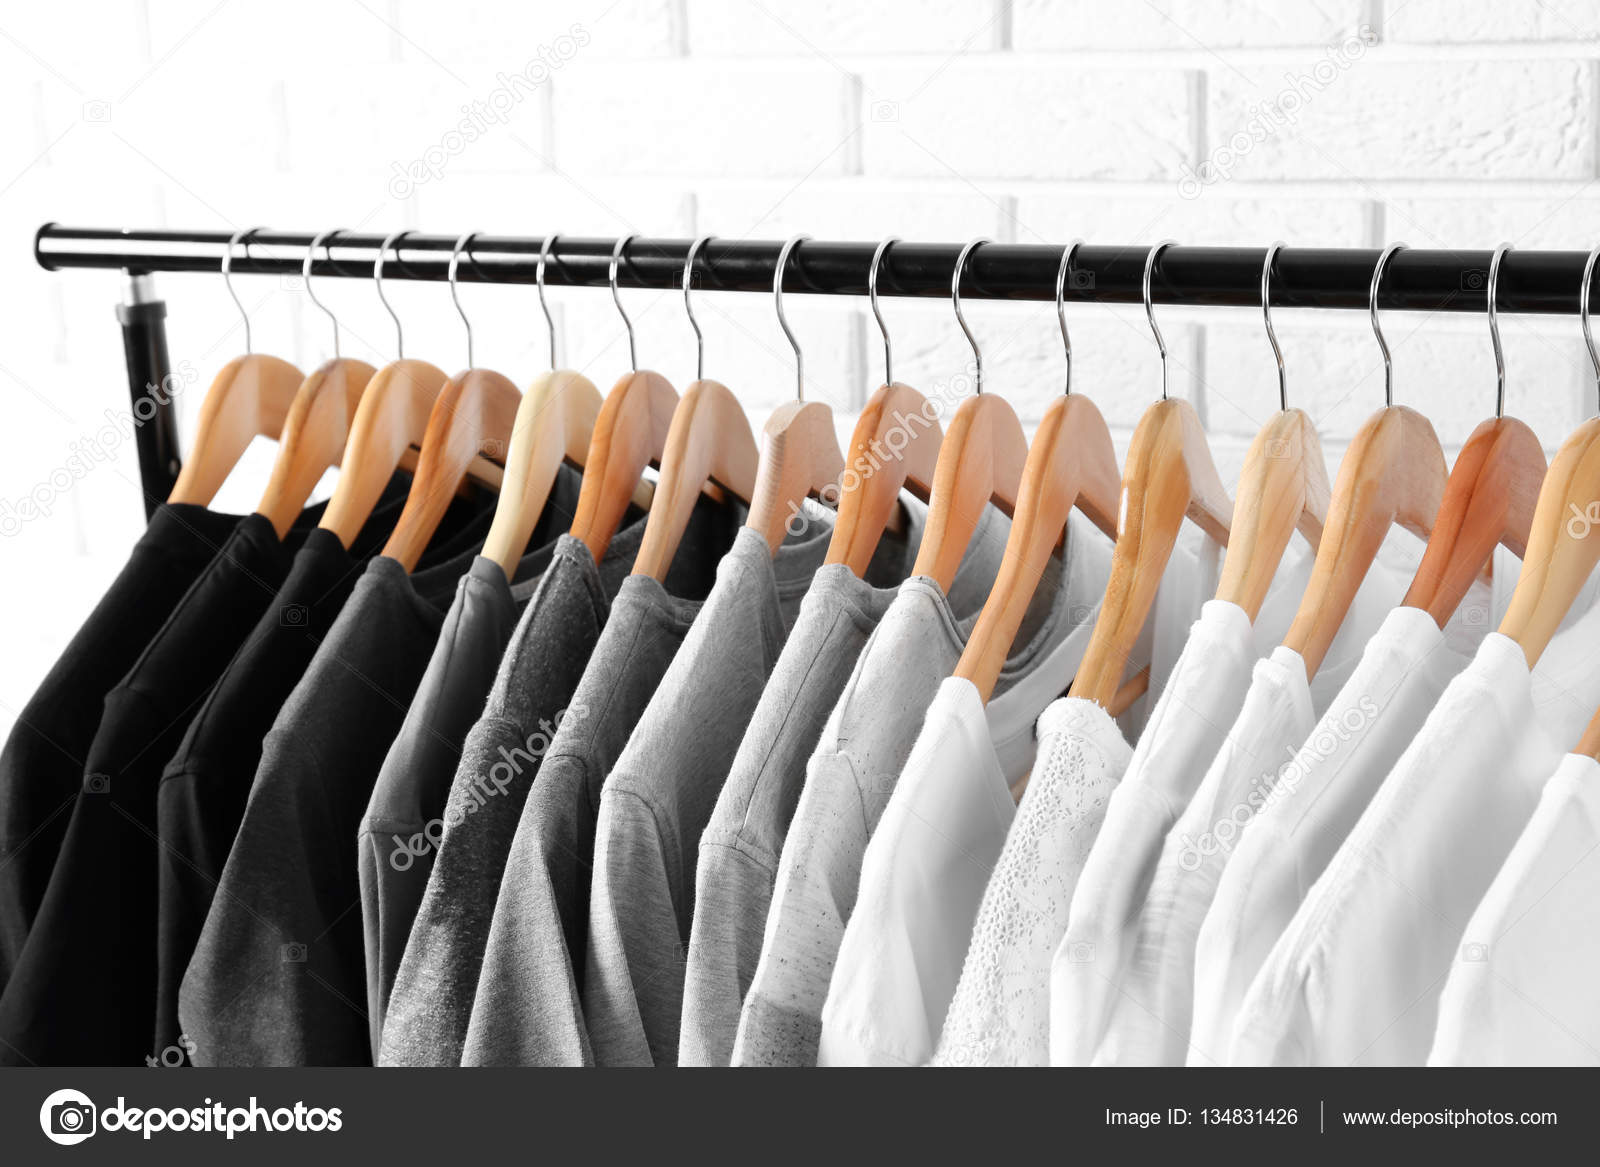 https://st3.depositphotos.com/1177973/13483/i/1600/depositphotos_134831426-stock-photo-t-shirts-on-hangers-against.jpg